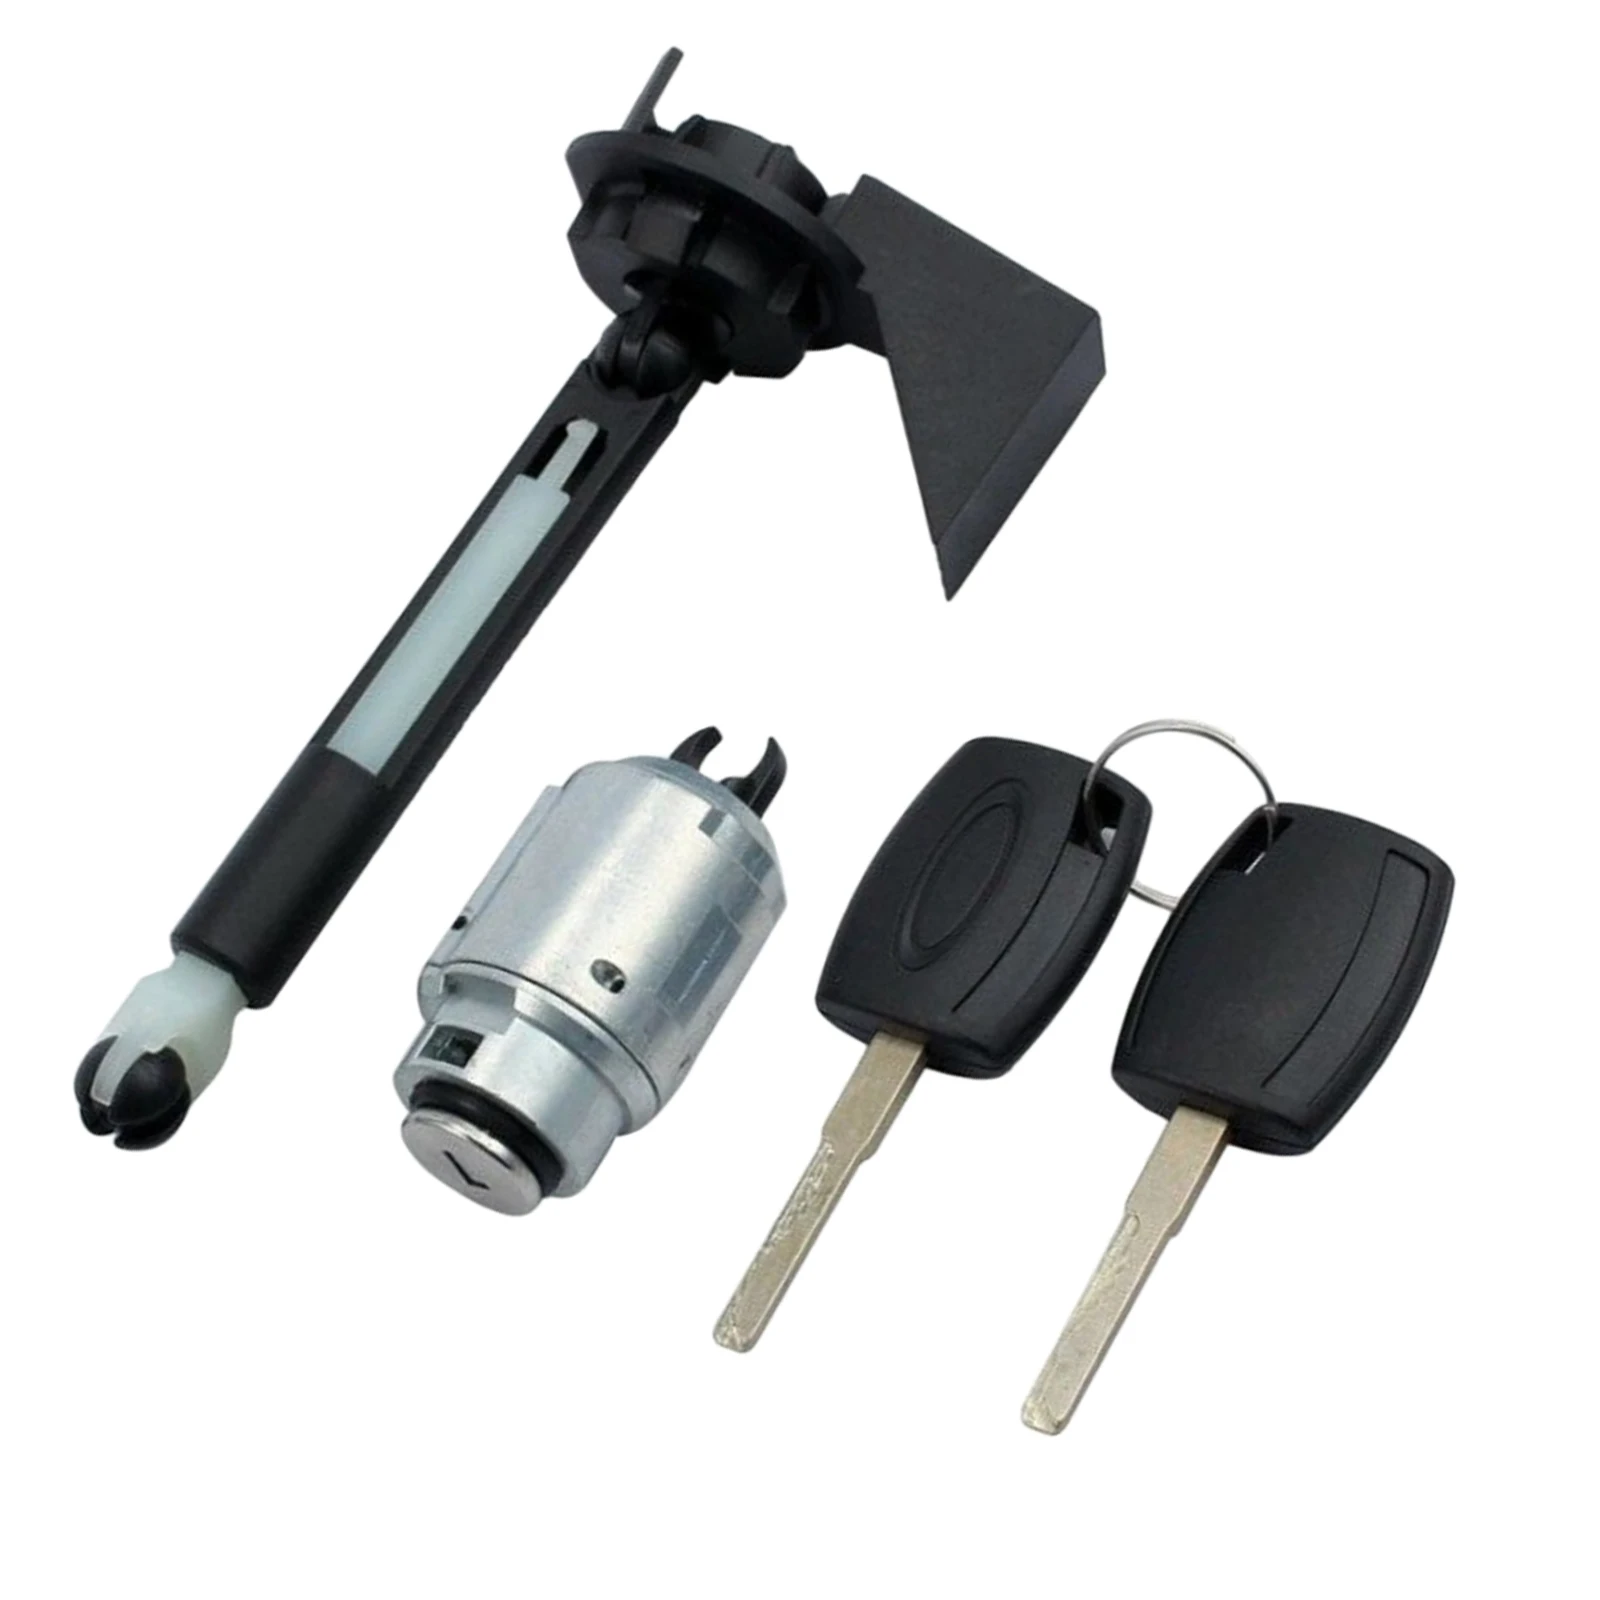 Bonnet Hood Release Lock Repair Kit w/2 Keys for Ford Focus MK2 2004-2012